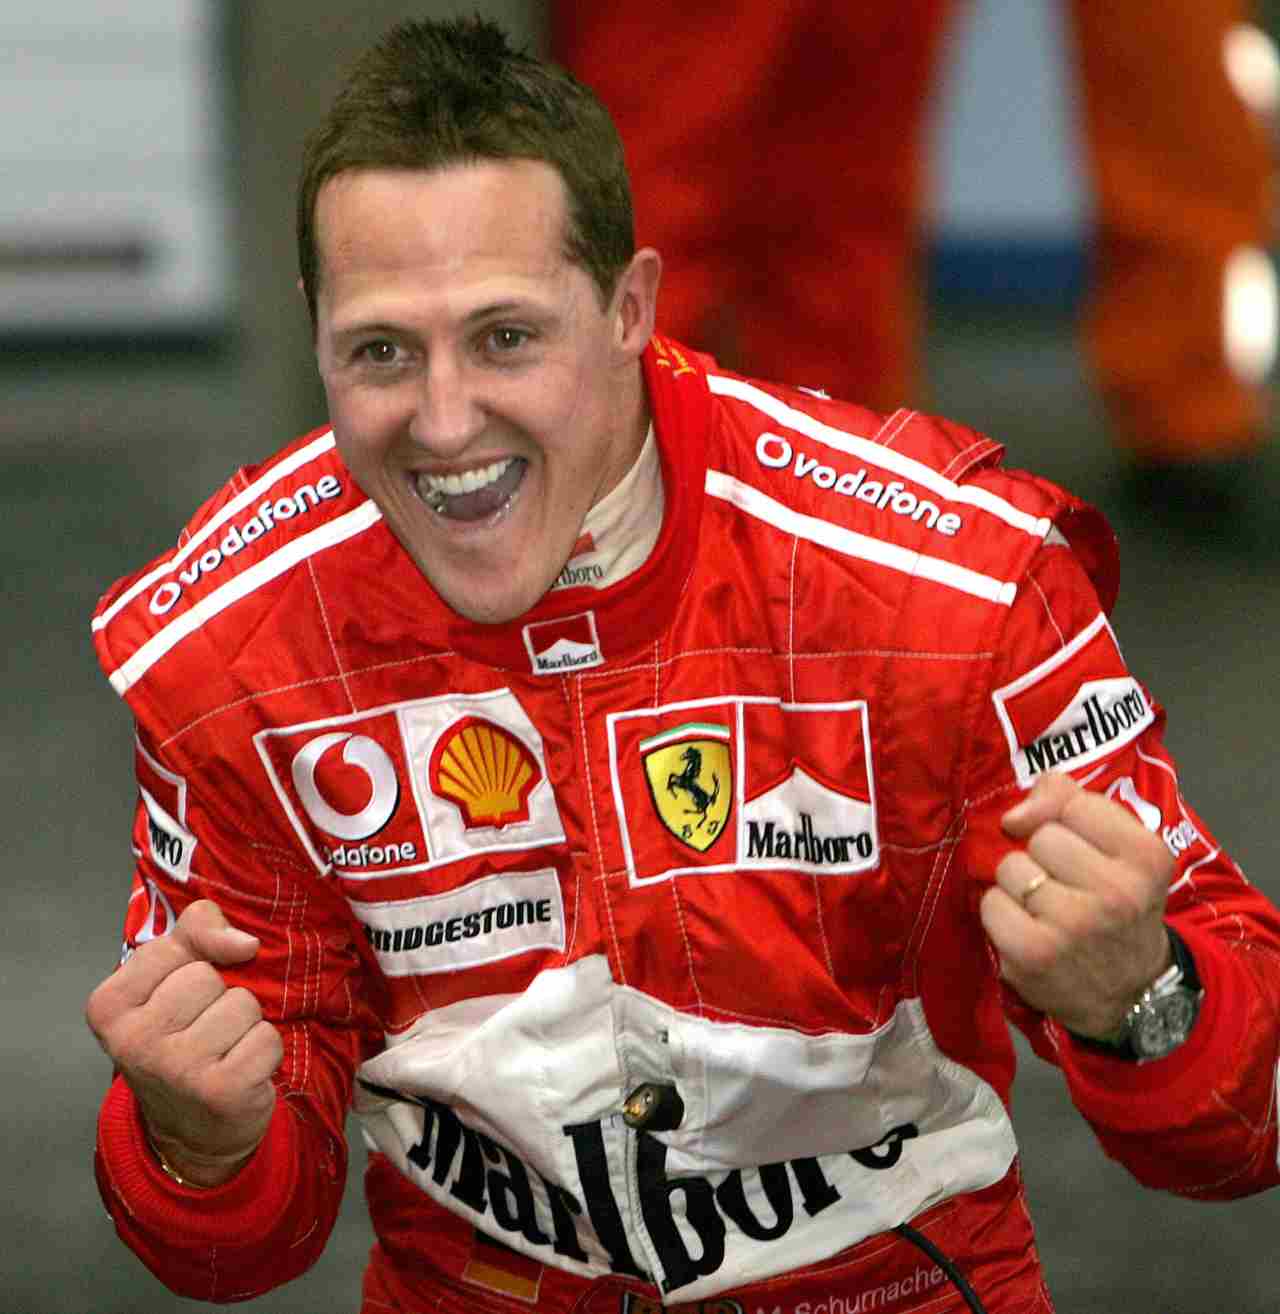 Michael Schumacher, 14 anni fa l'ultima vittoria in F1 - Video